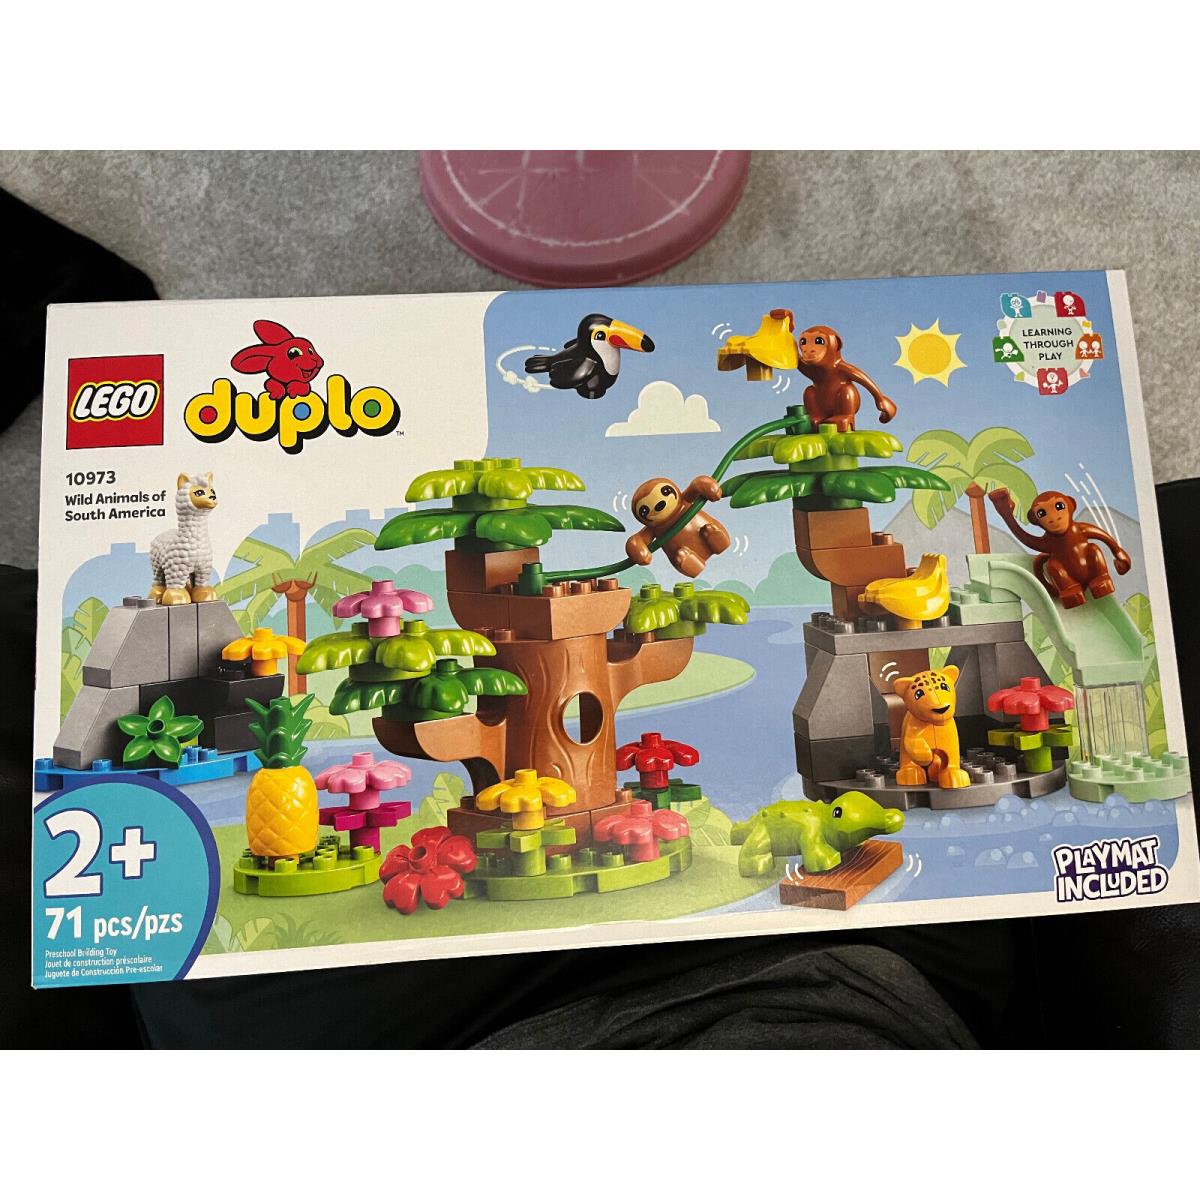 Lego Duplo Wild Animals of South America 10973 Educational Set